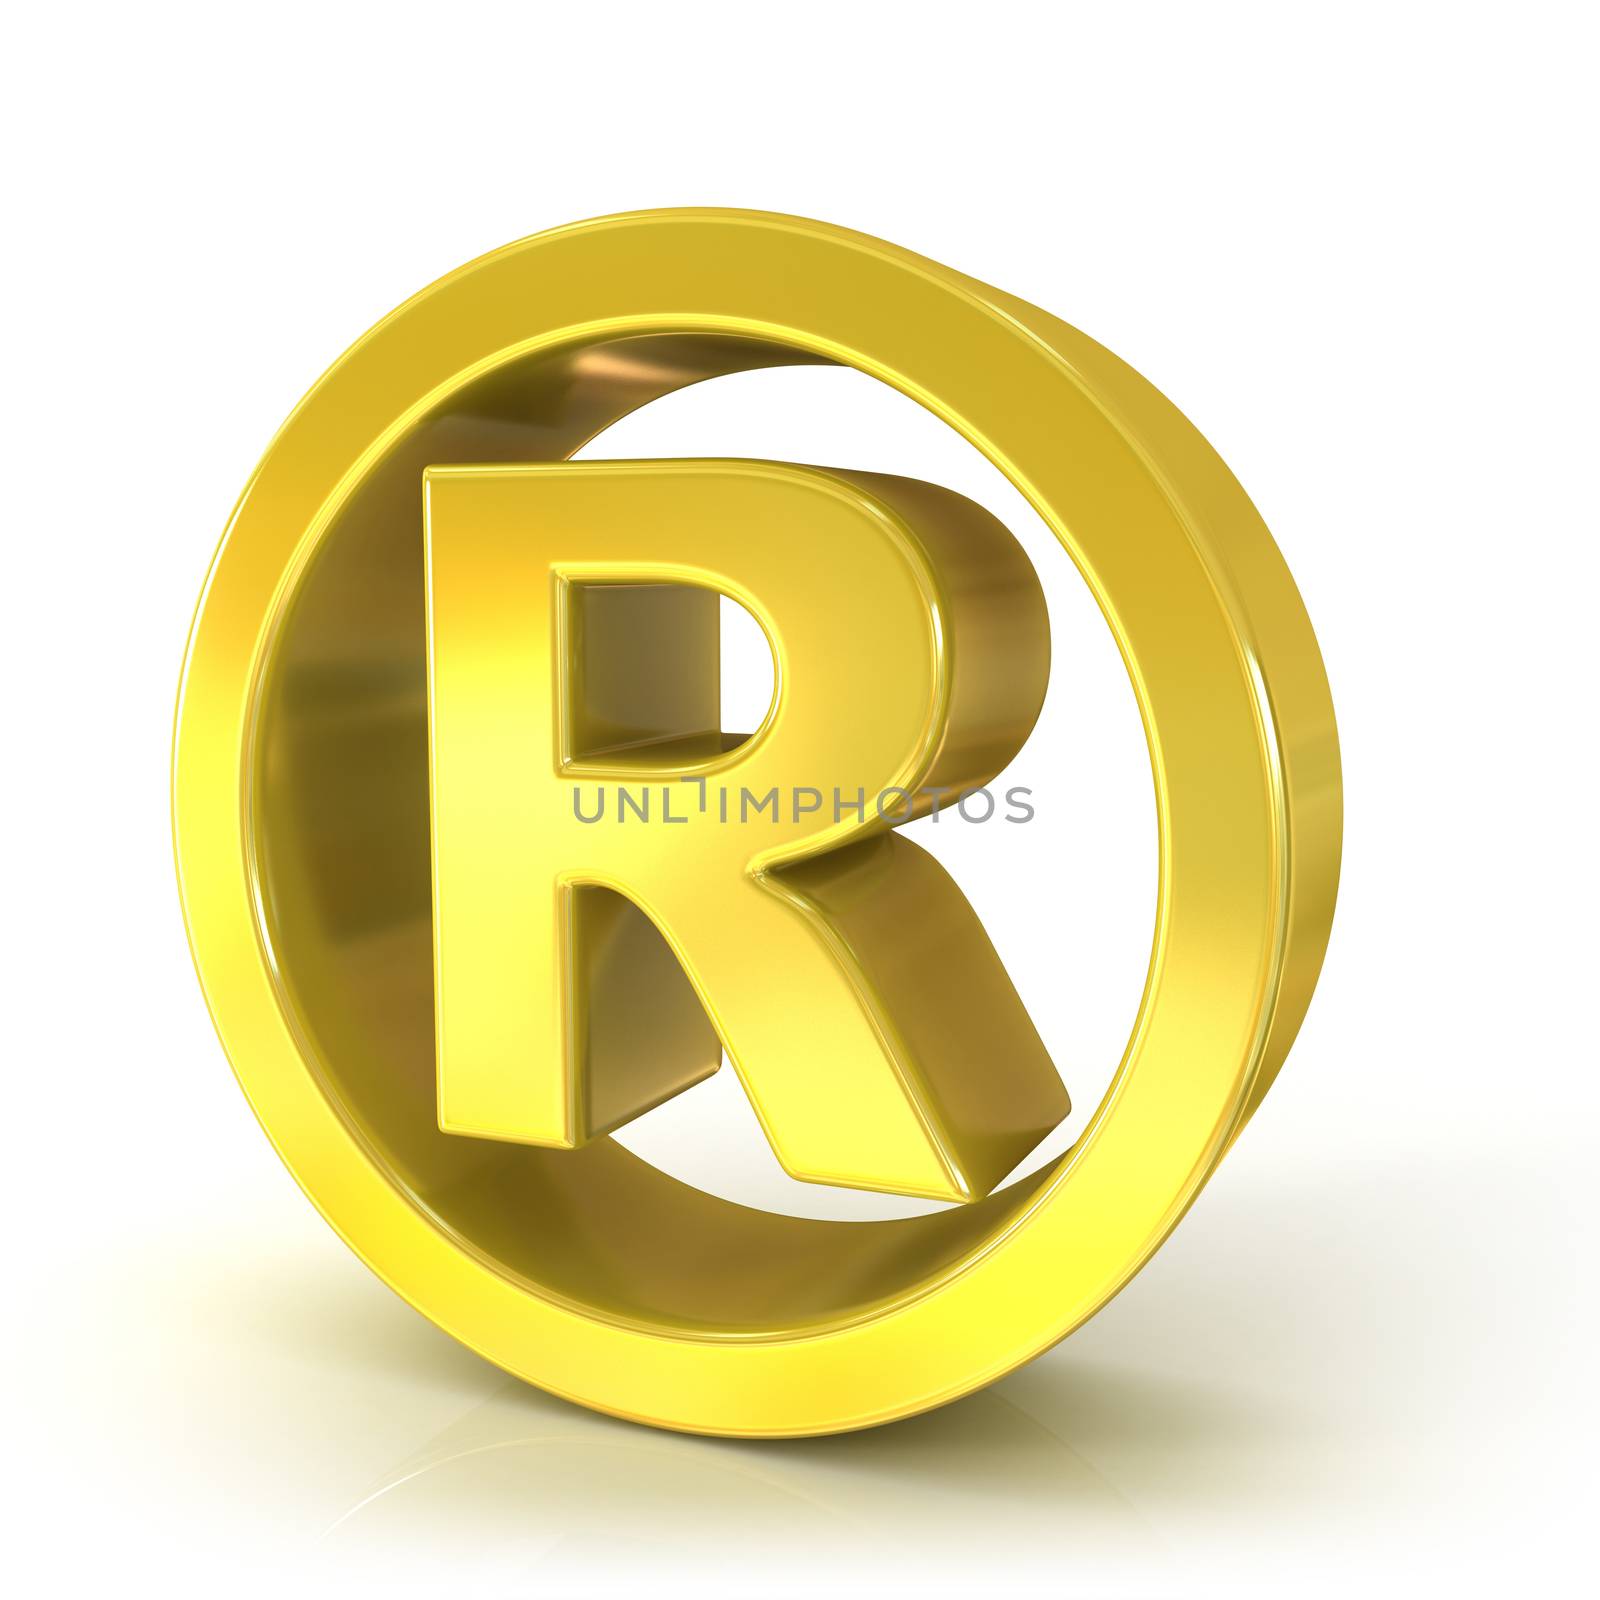 Registered trademark 3D golden sign by djmilic